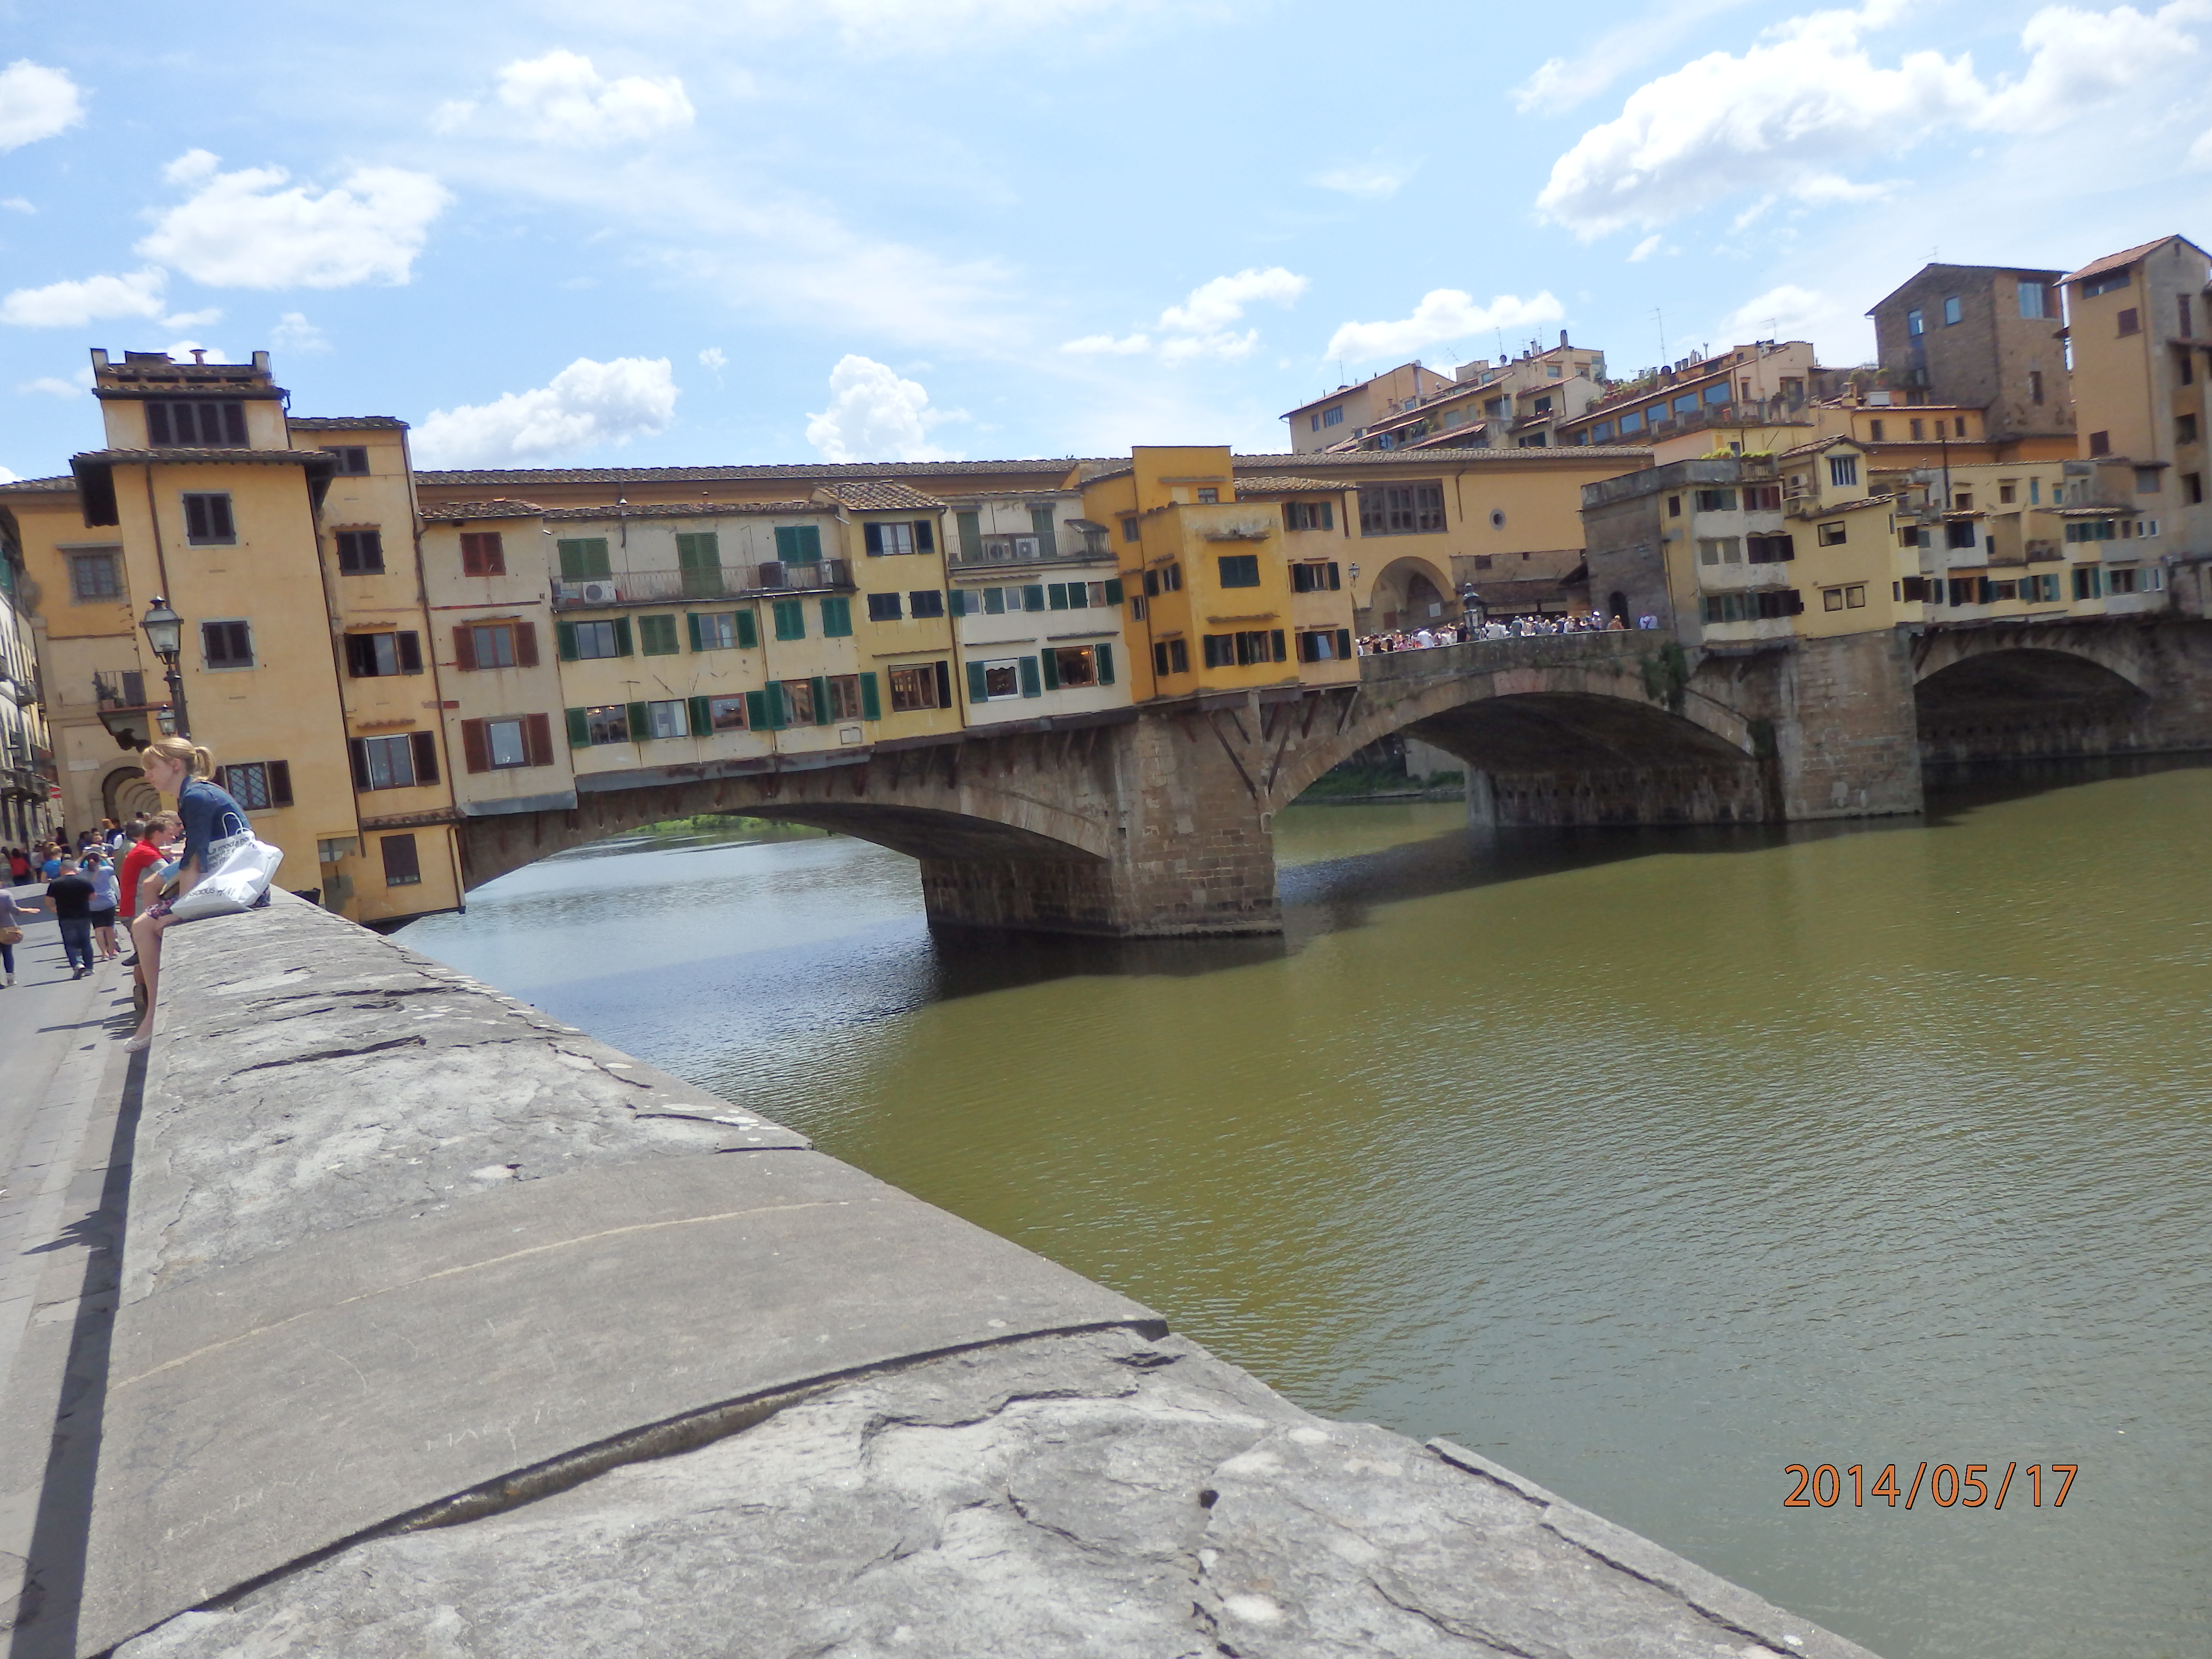 Ponte Vecchio #2 - Keating's